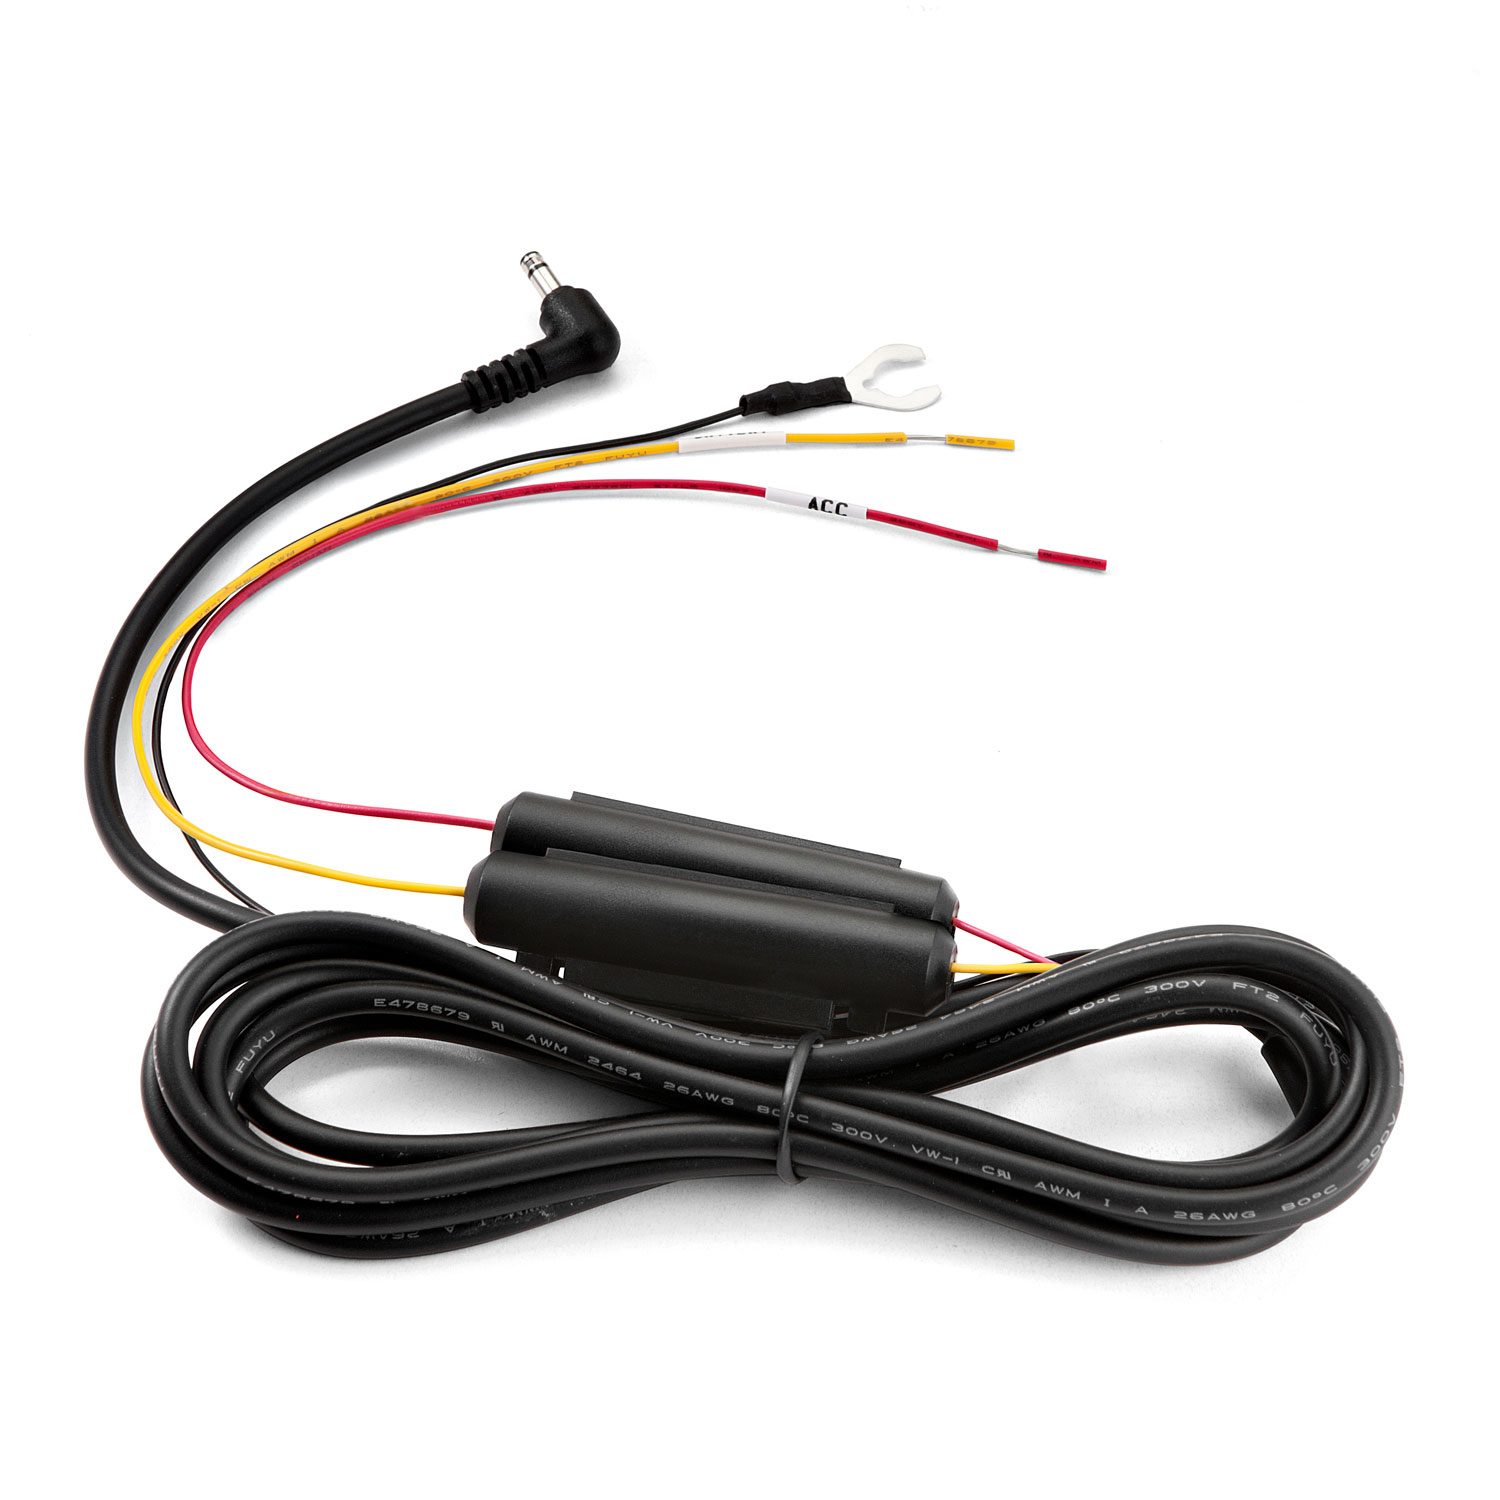 THINKWARE Hardwiring Cable for THINKWARE Dash Cams (TWA-SH)